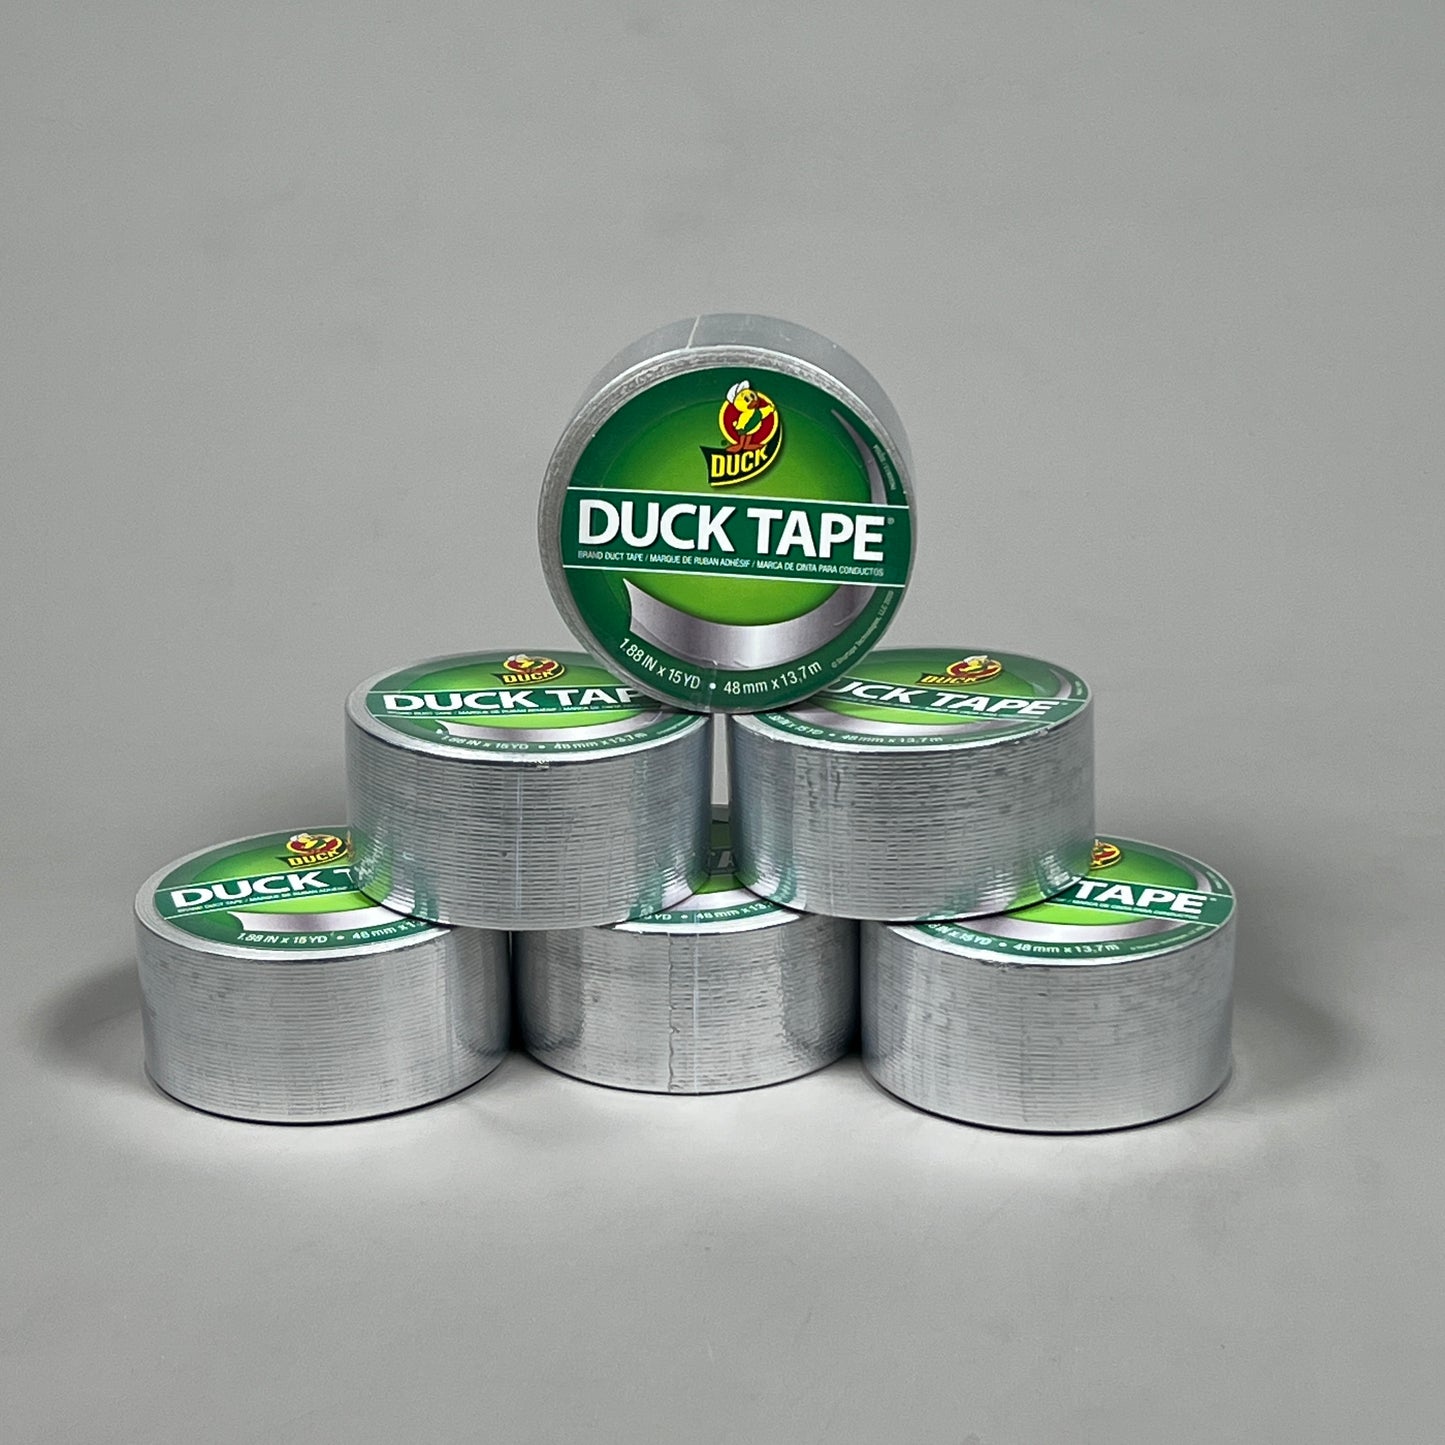 SHURTAPE DUCK TAPE 6 ROLLS! Chrome Duct Tape 1.88" X 15 YD/Roll 332554 (New)